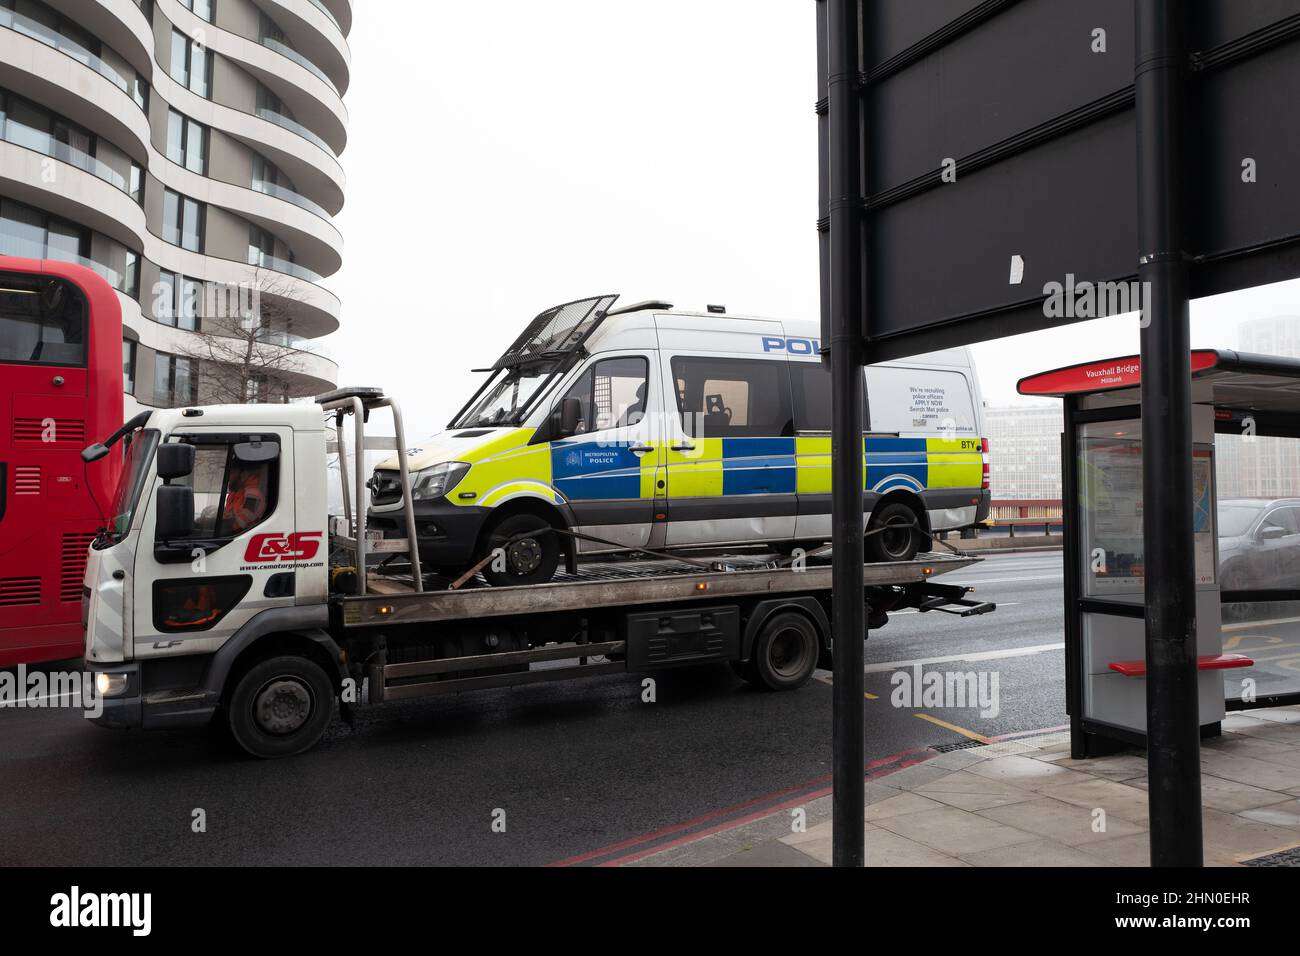 A Met Police van on the back of a breakdown truck. Image taken on Vauxhall Bridge, London UK Stock Photo